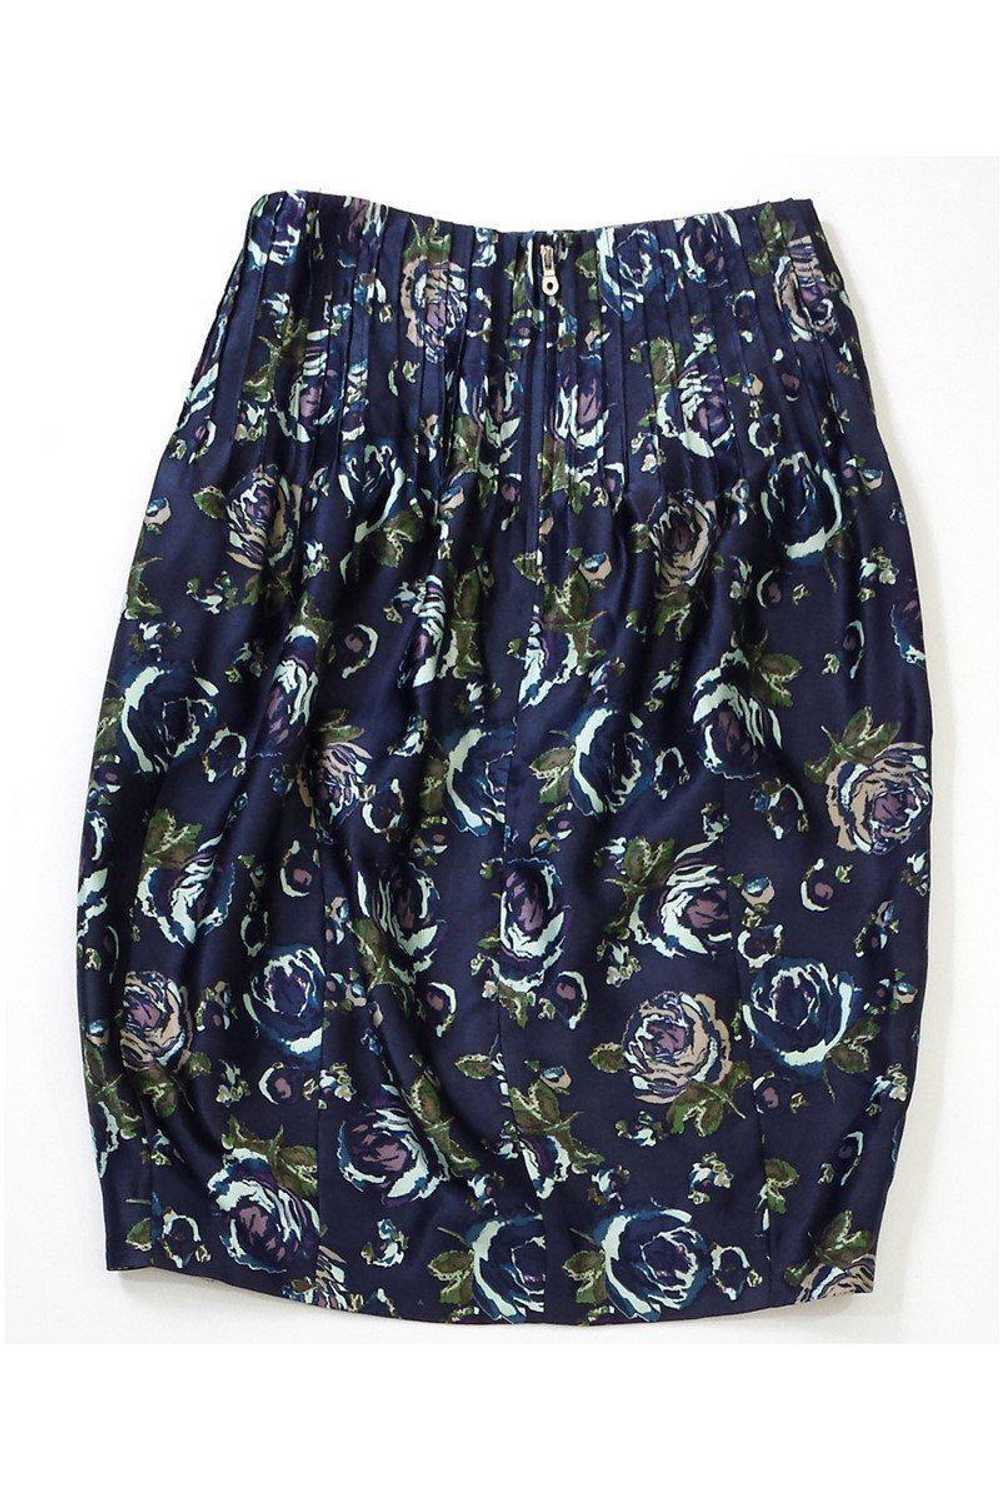 Suno - Blue Floral Print Silk Skirt Sz XS - image 2